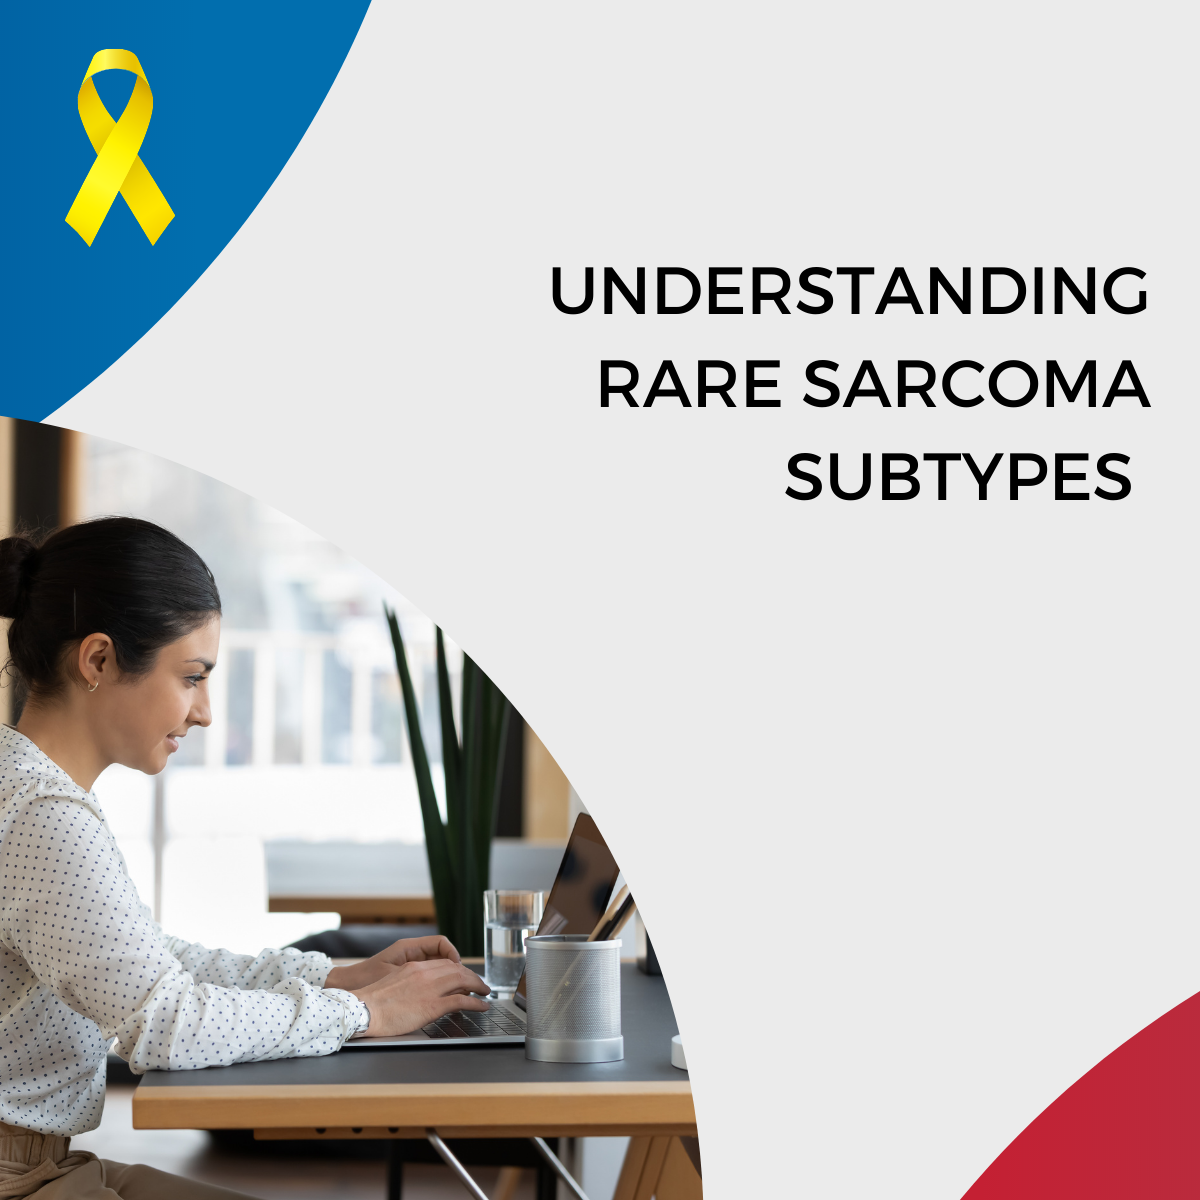 Understanding CIC rearranged sarcoma